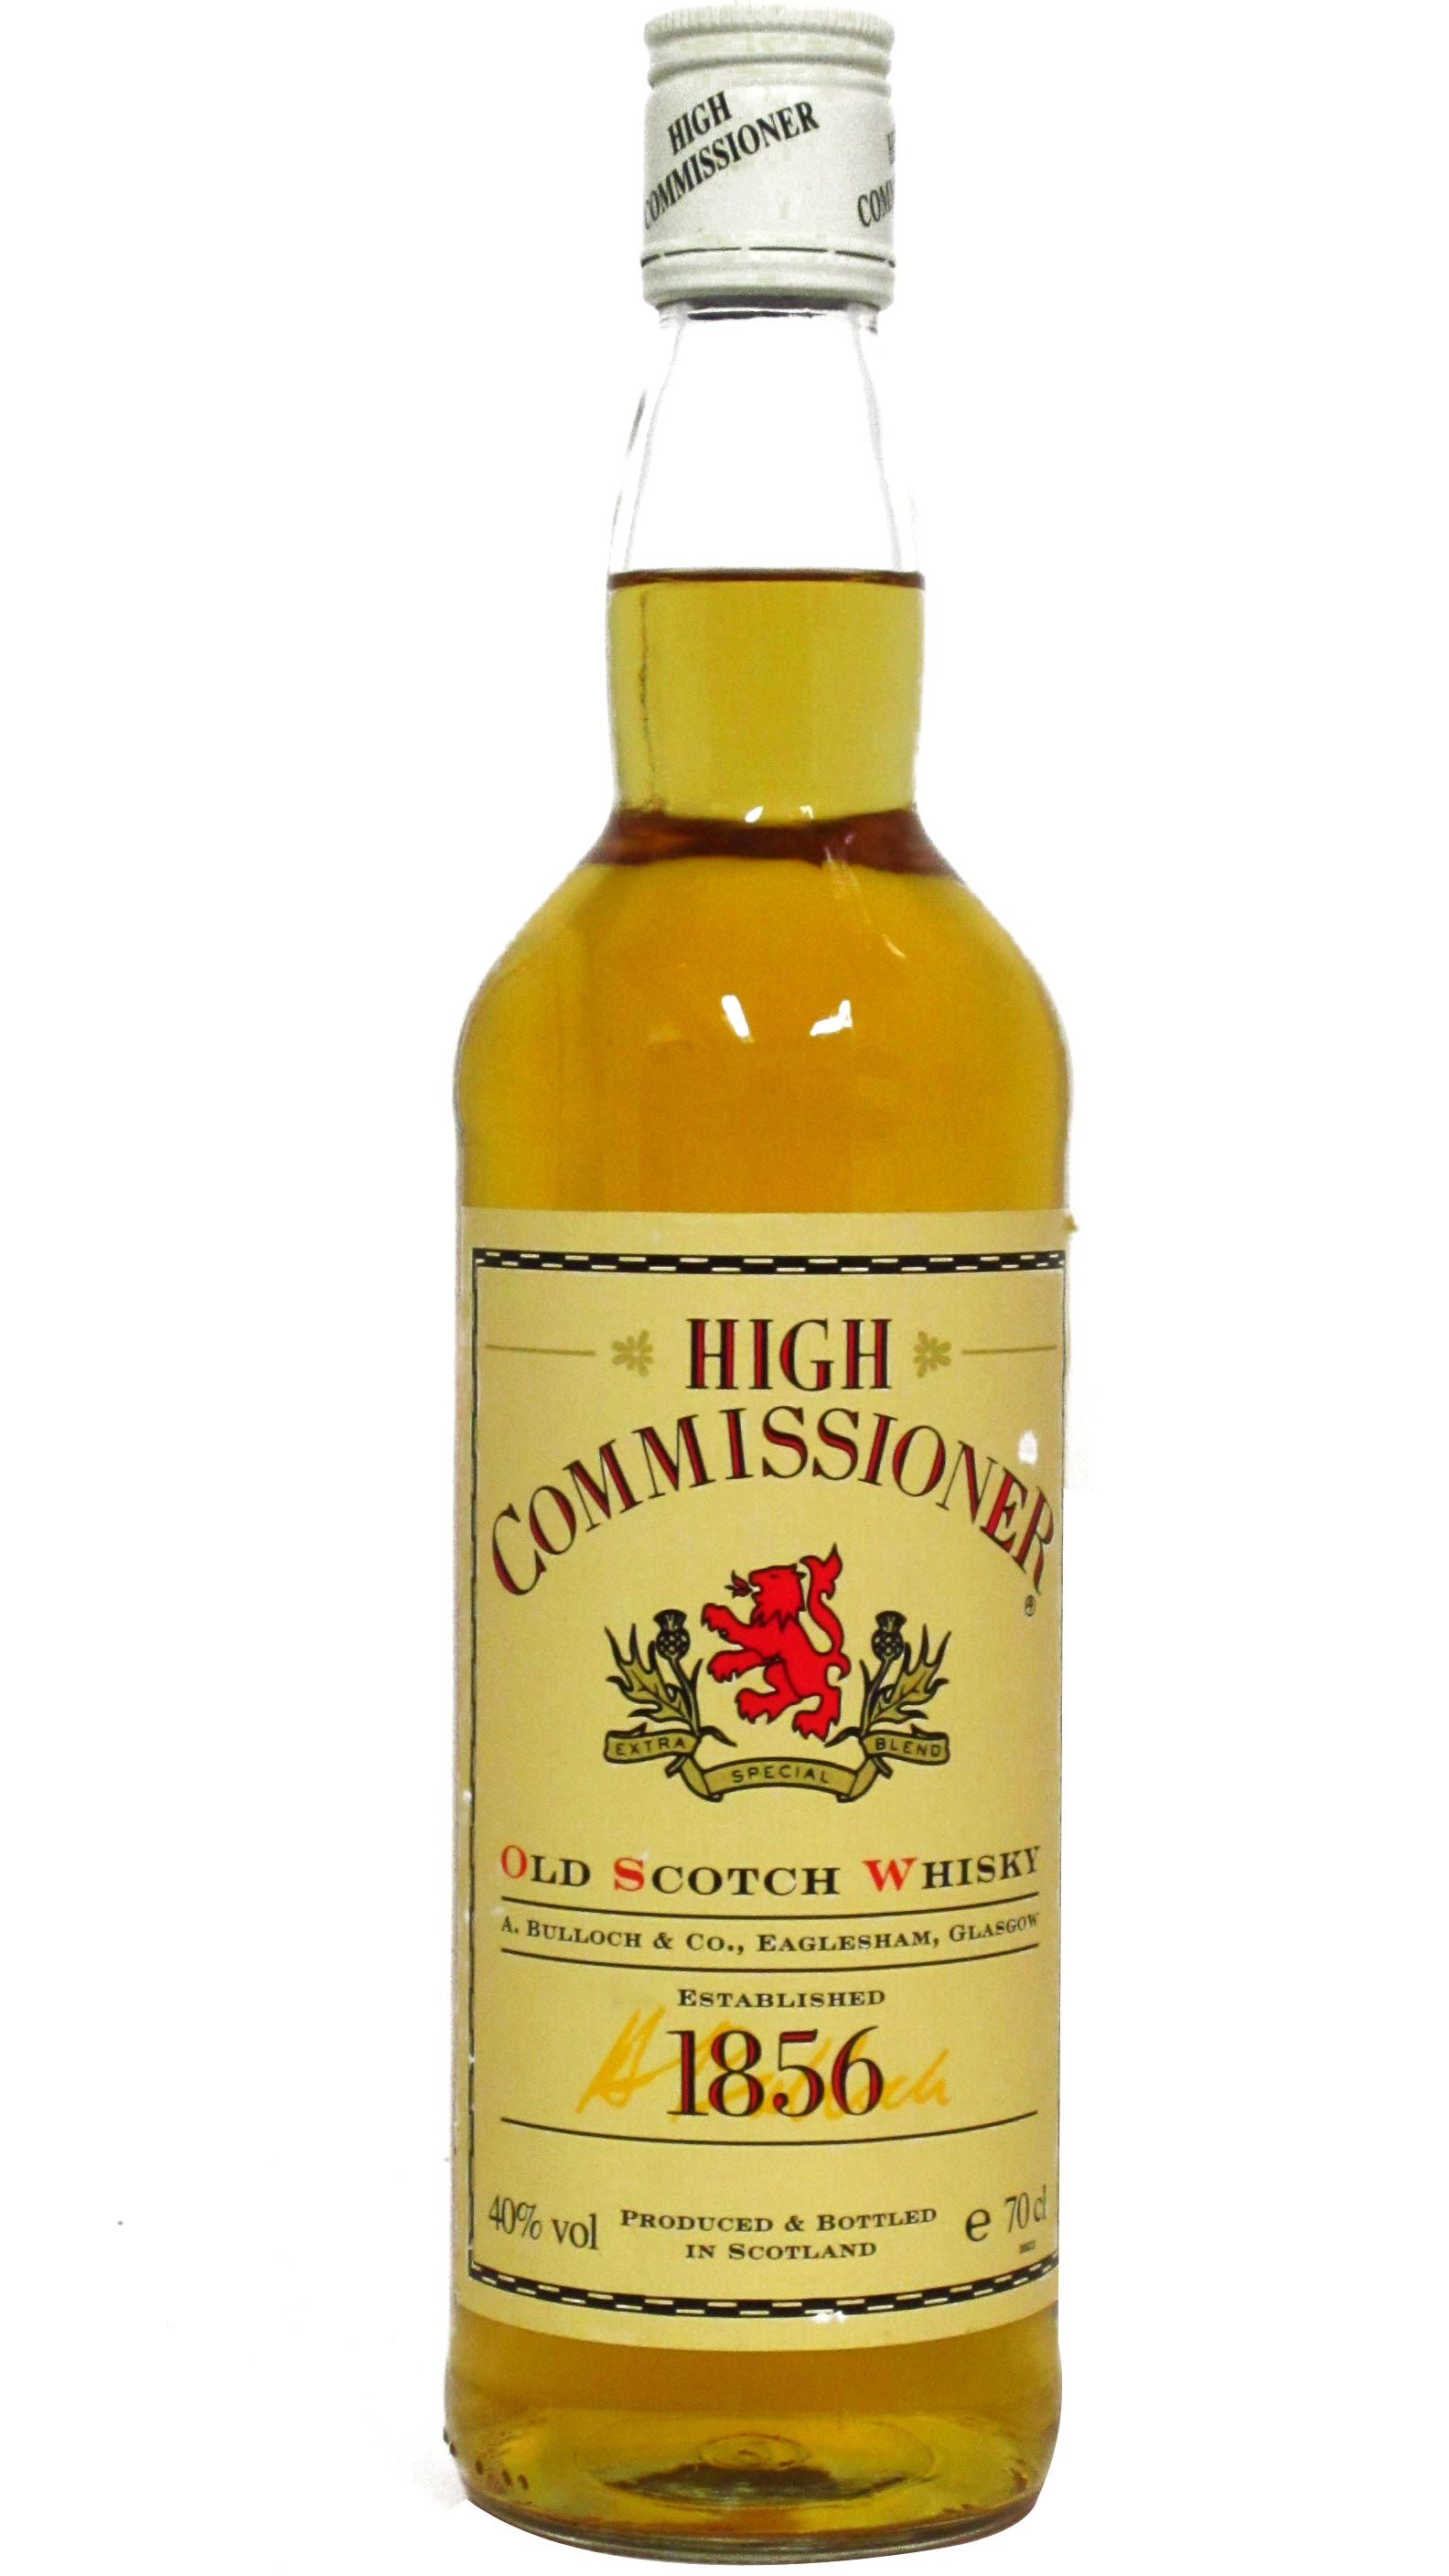 Виски Хай Коммишинер. Виски Commissioner 1856. High Commissioner виски. Commissioner Blended Scotch Whisky. Хай коммишинер